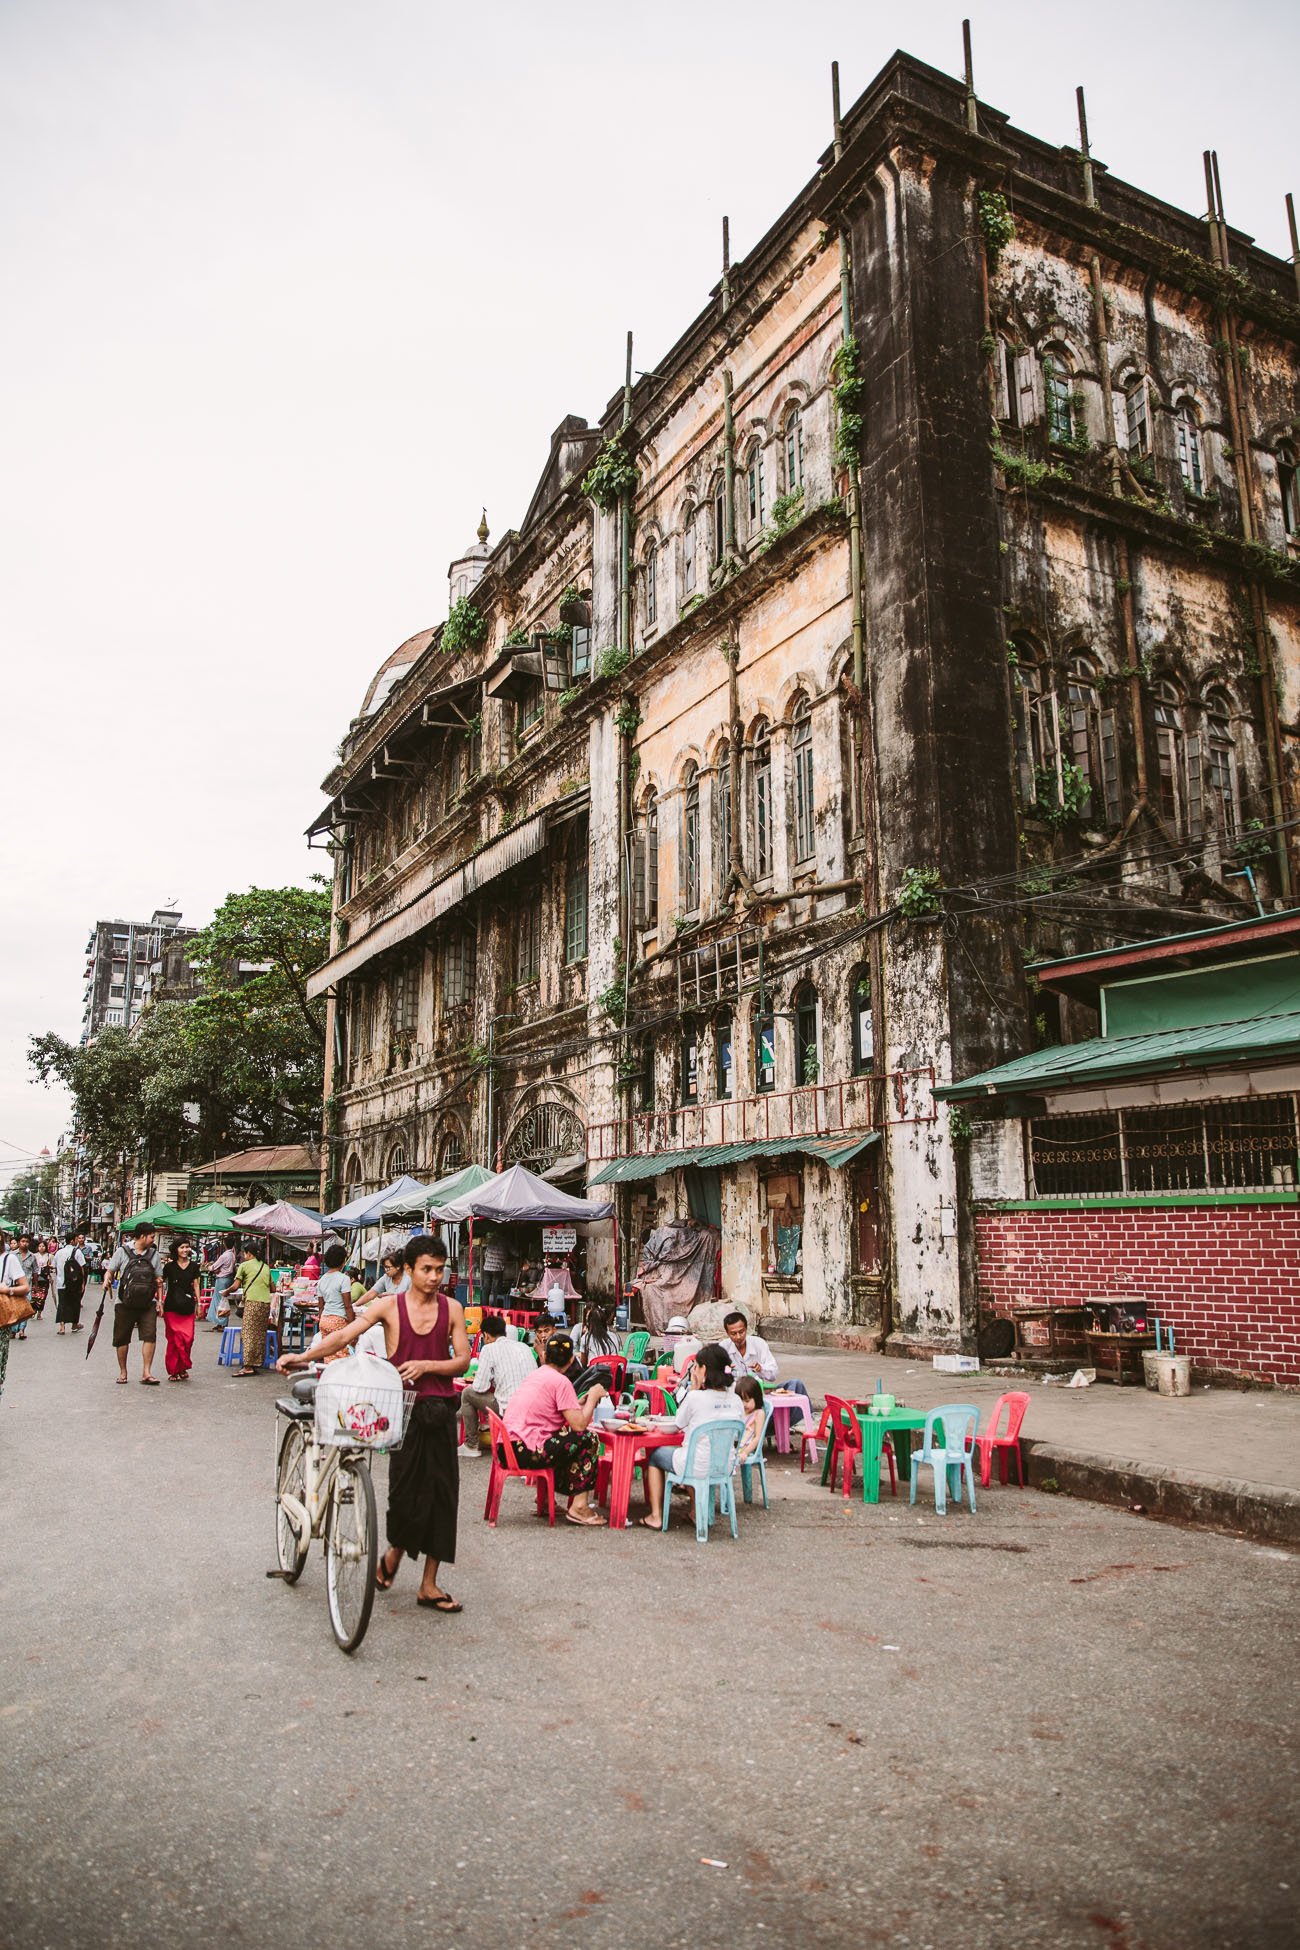 Architecture of Yangon Myanmar